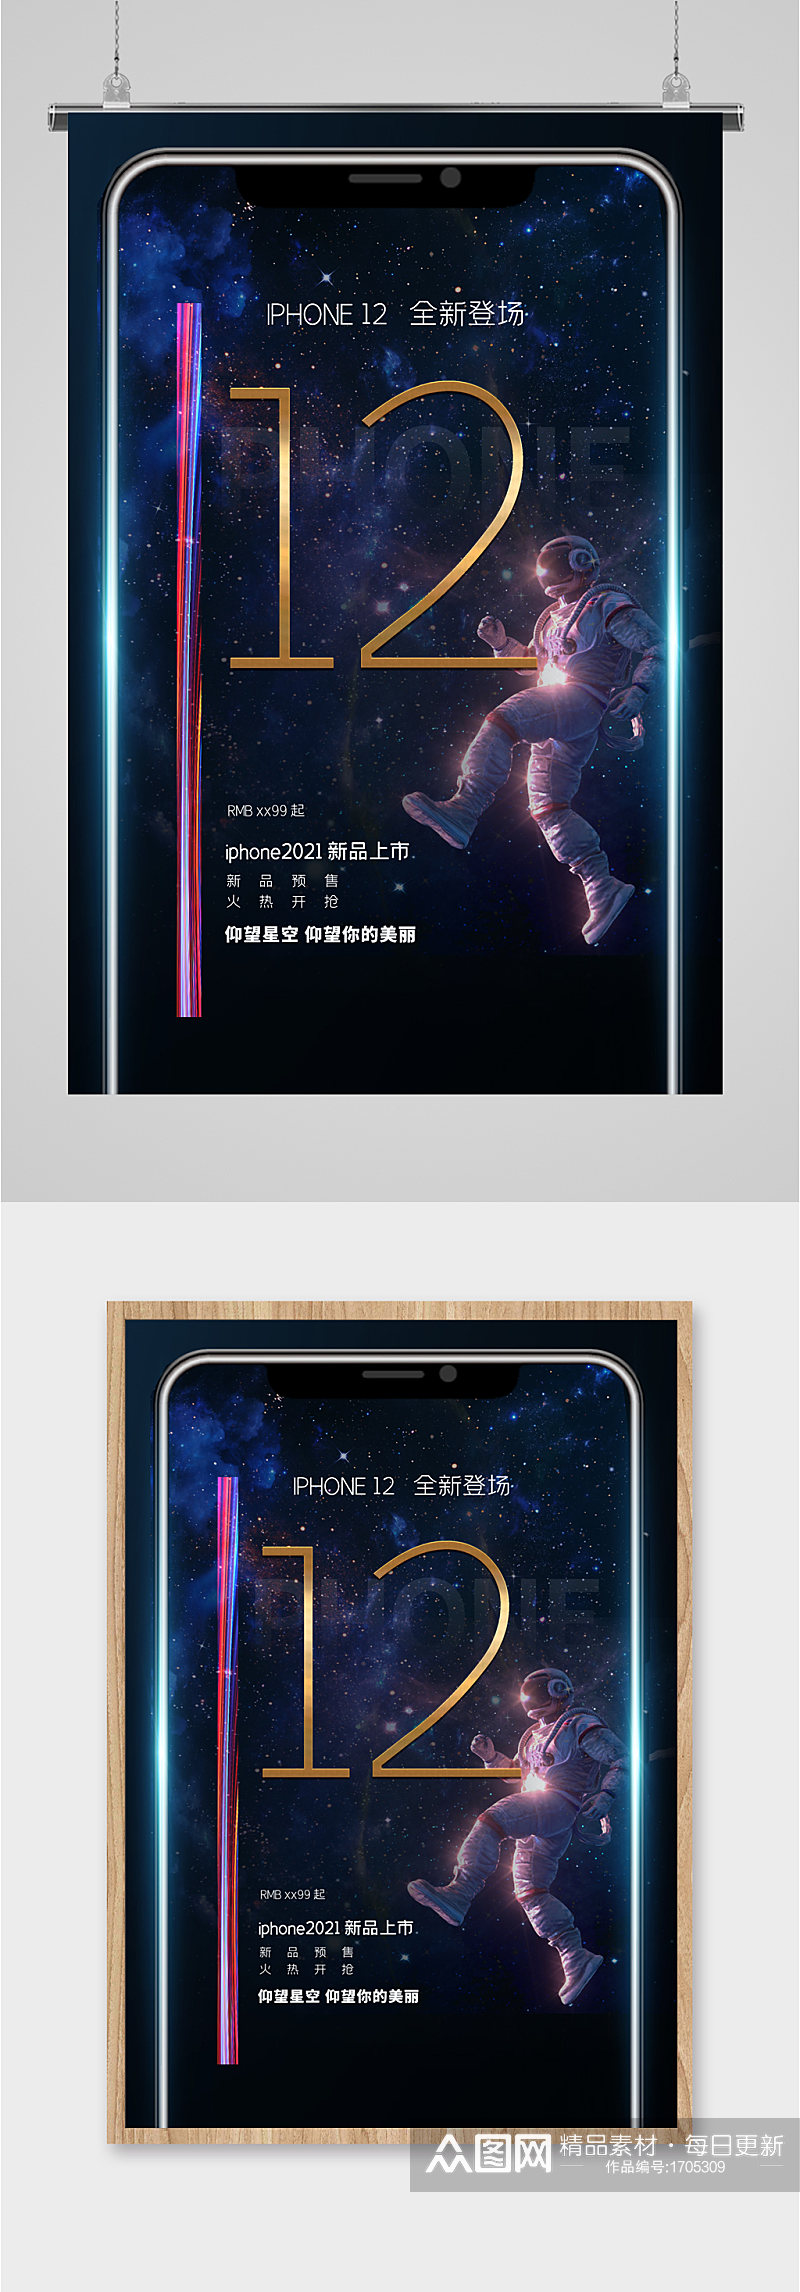 iPhone12新品发布海报素材